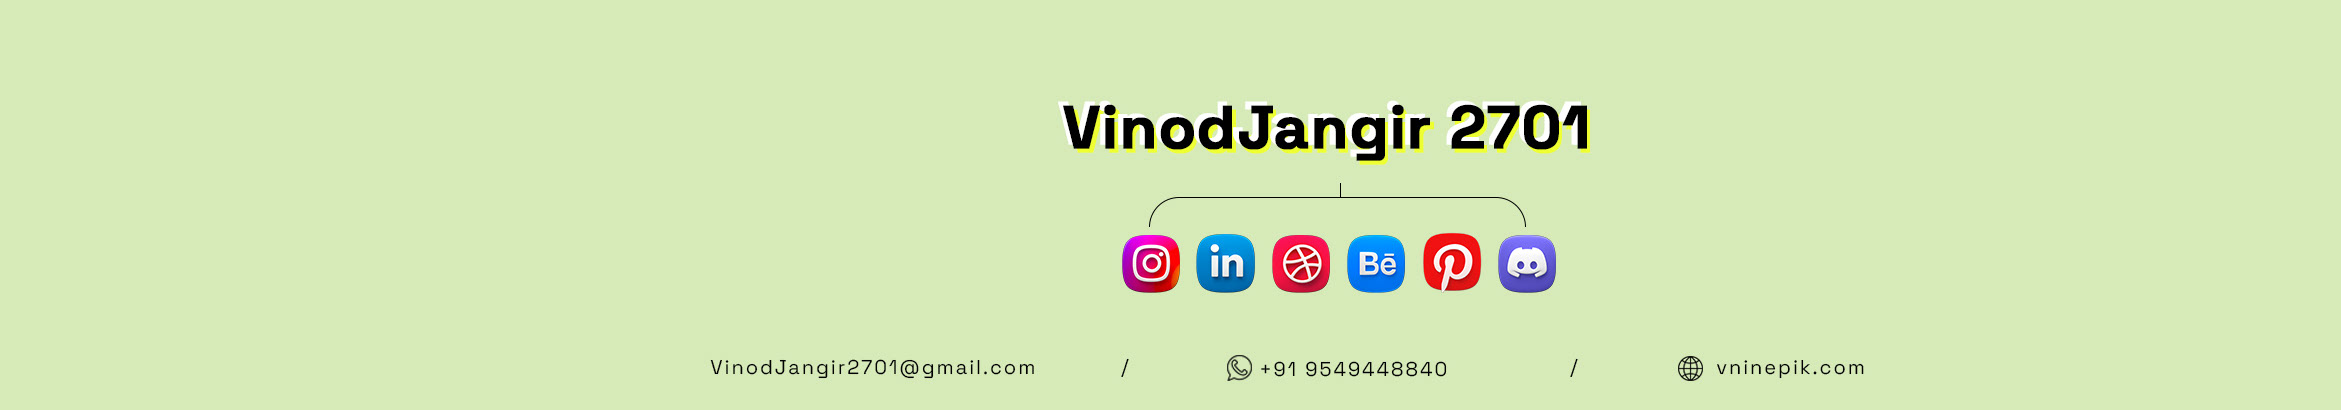 vinod jangir's profile banner